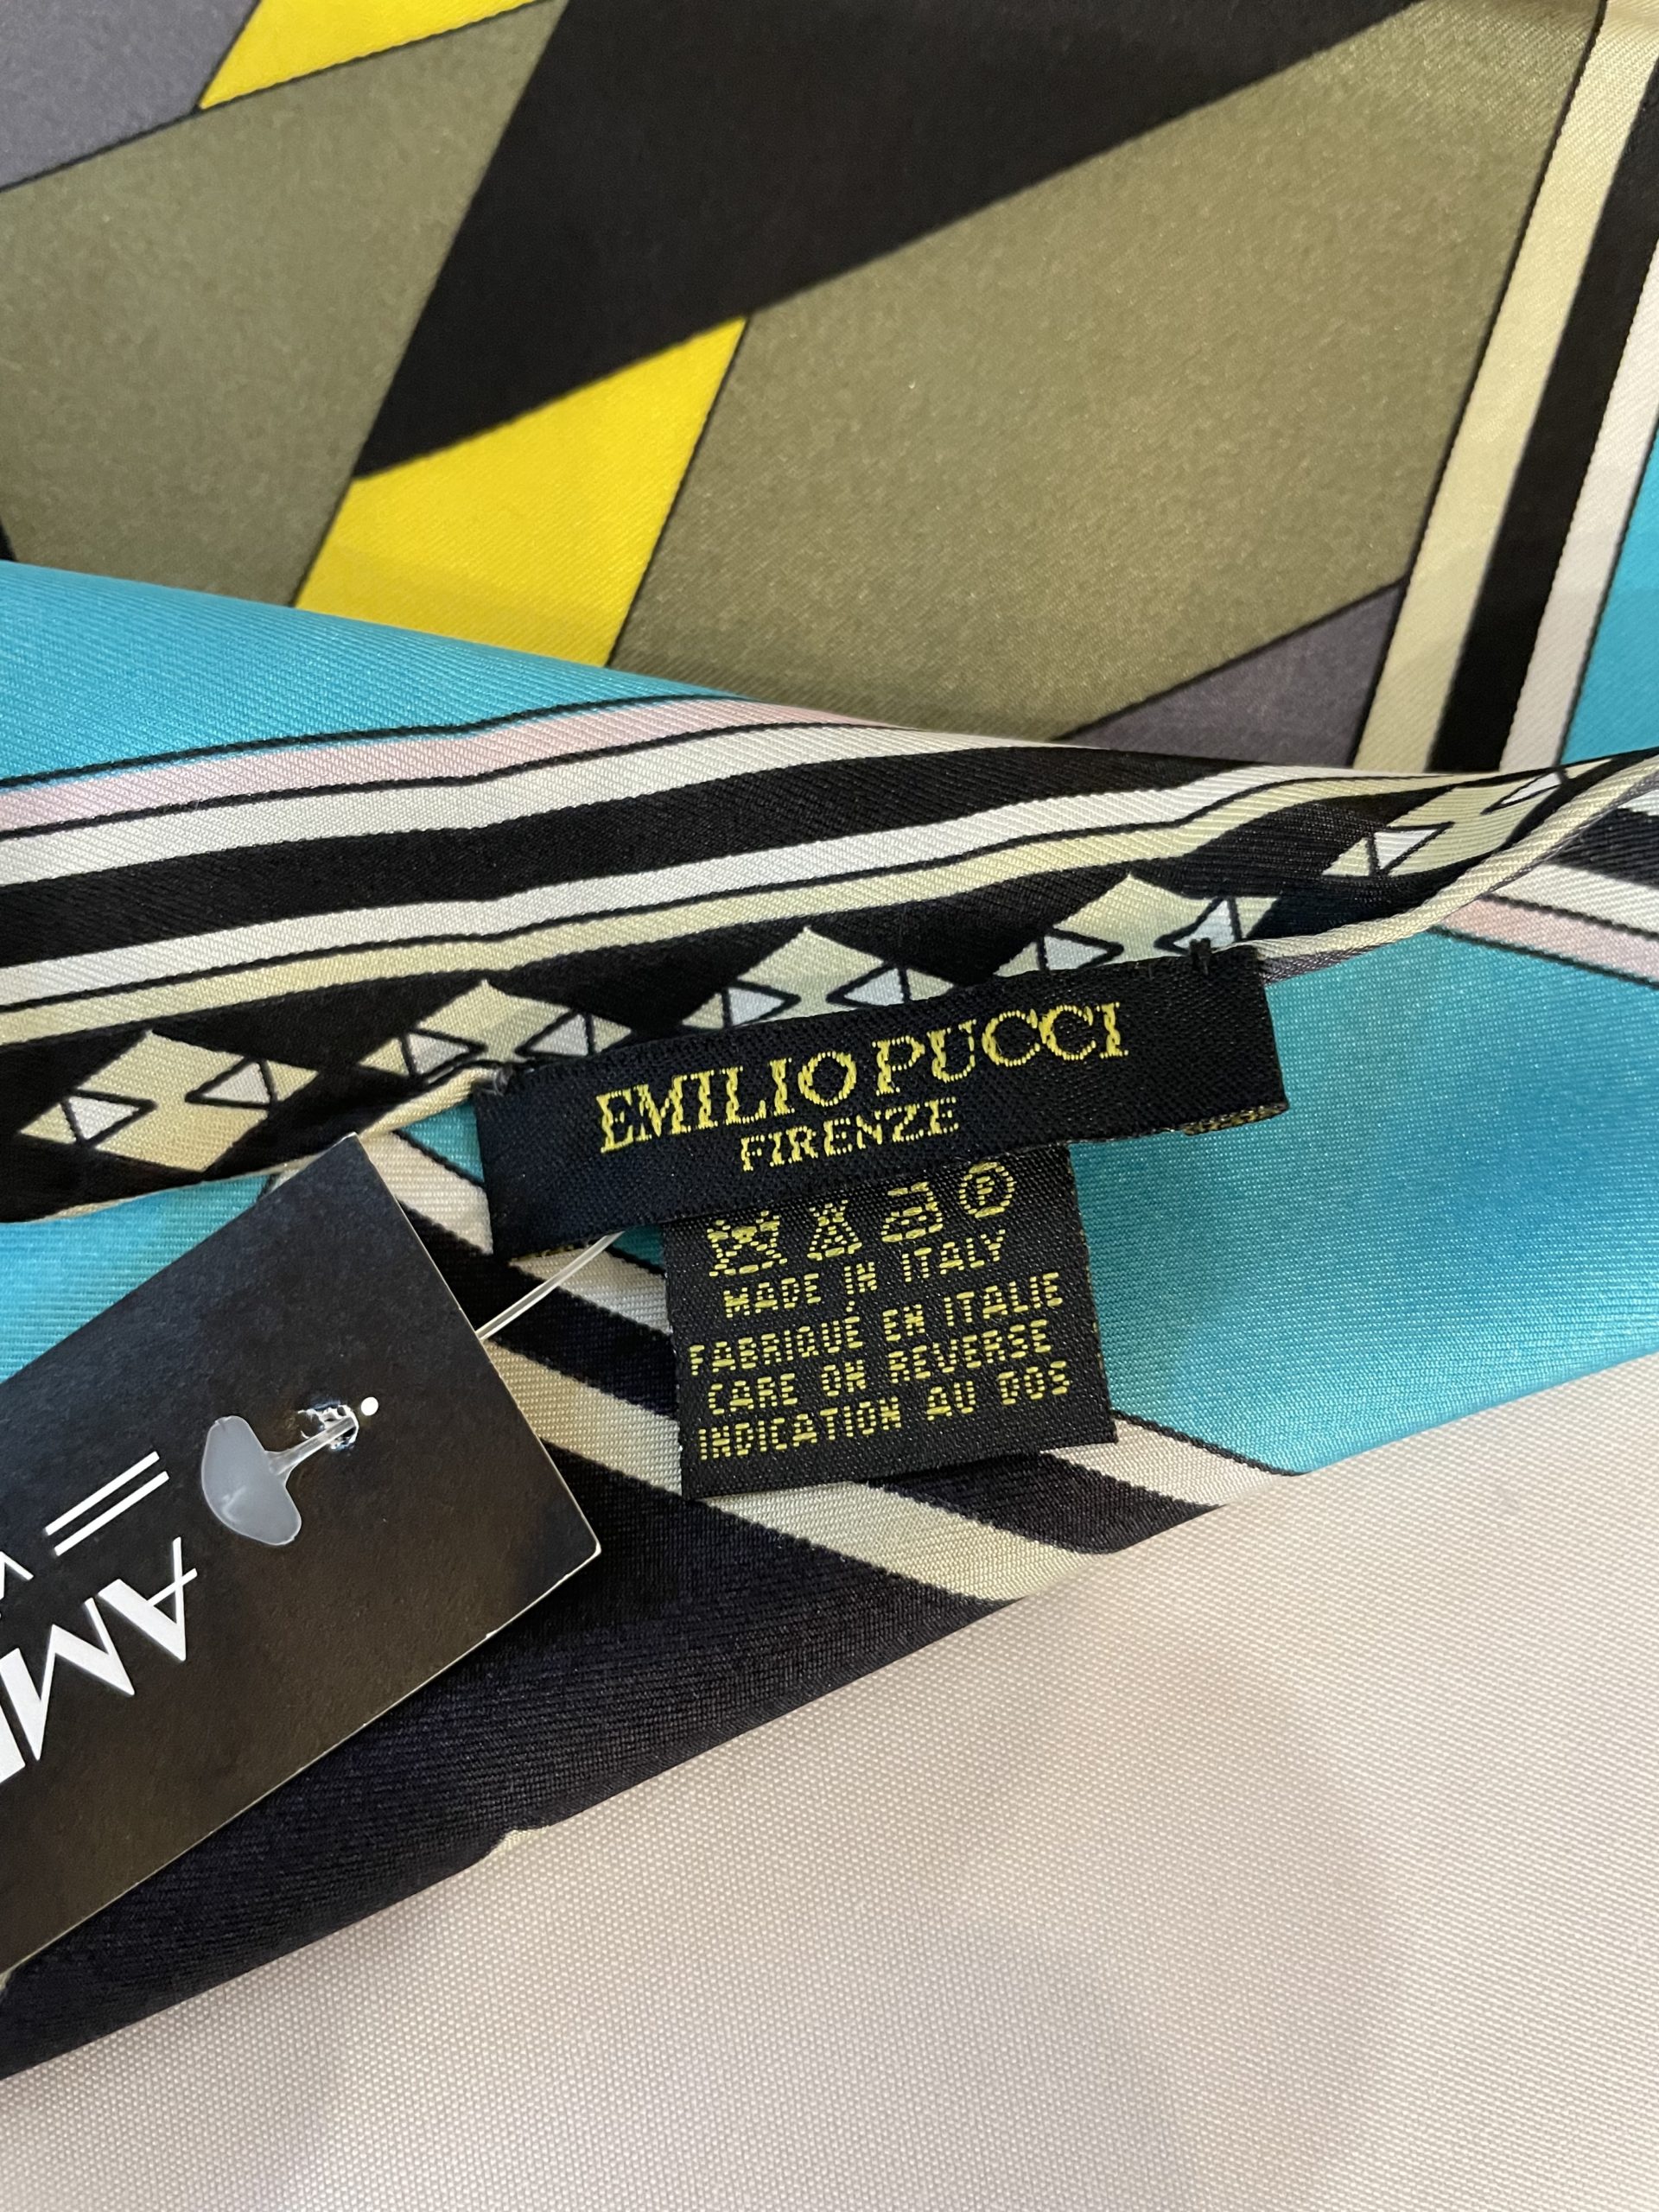 Emilio Pucci エミリオプッチ シルクスカーフ 90年代 silk scarf